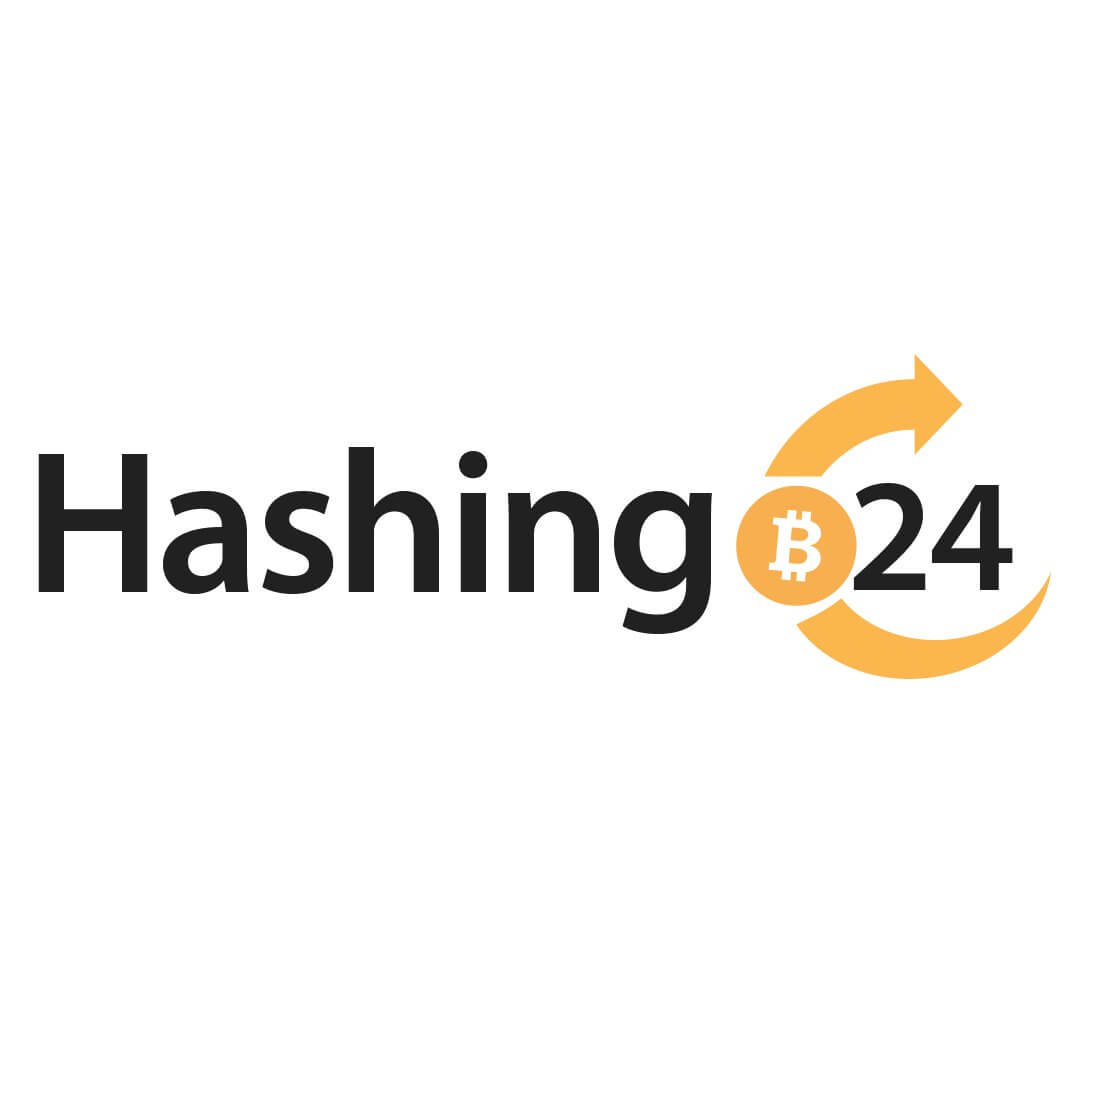 hashing 24